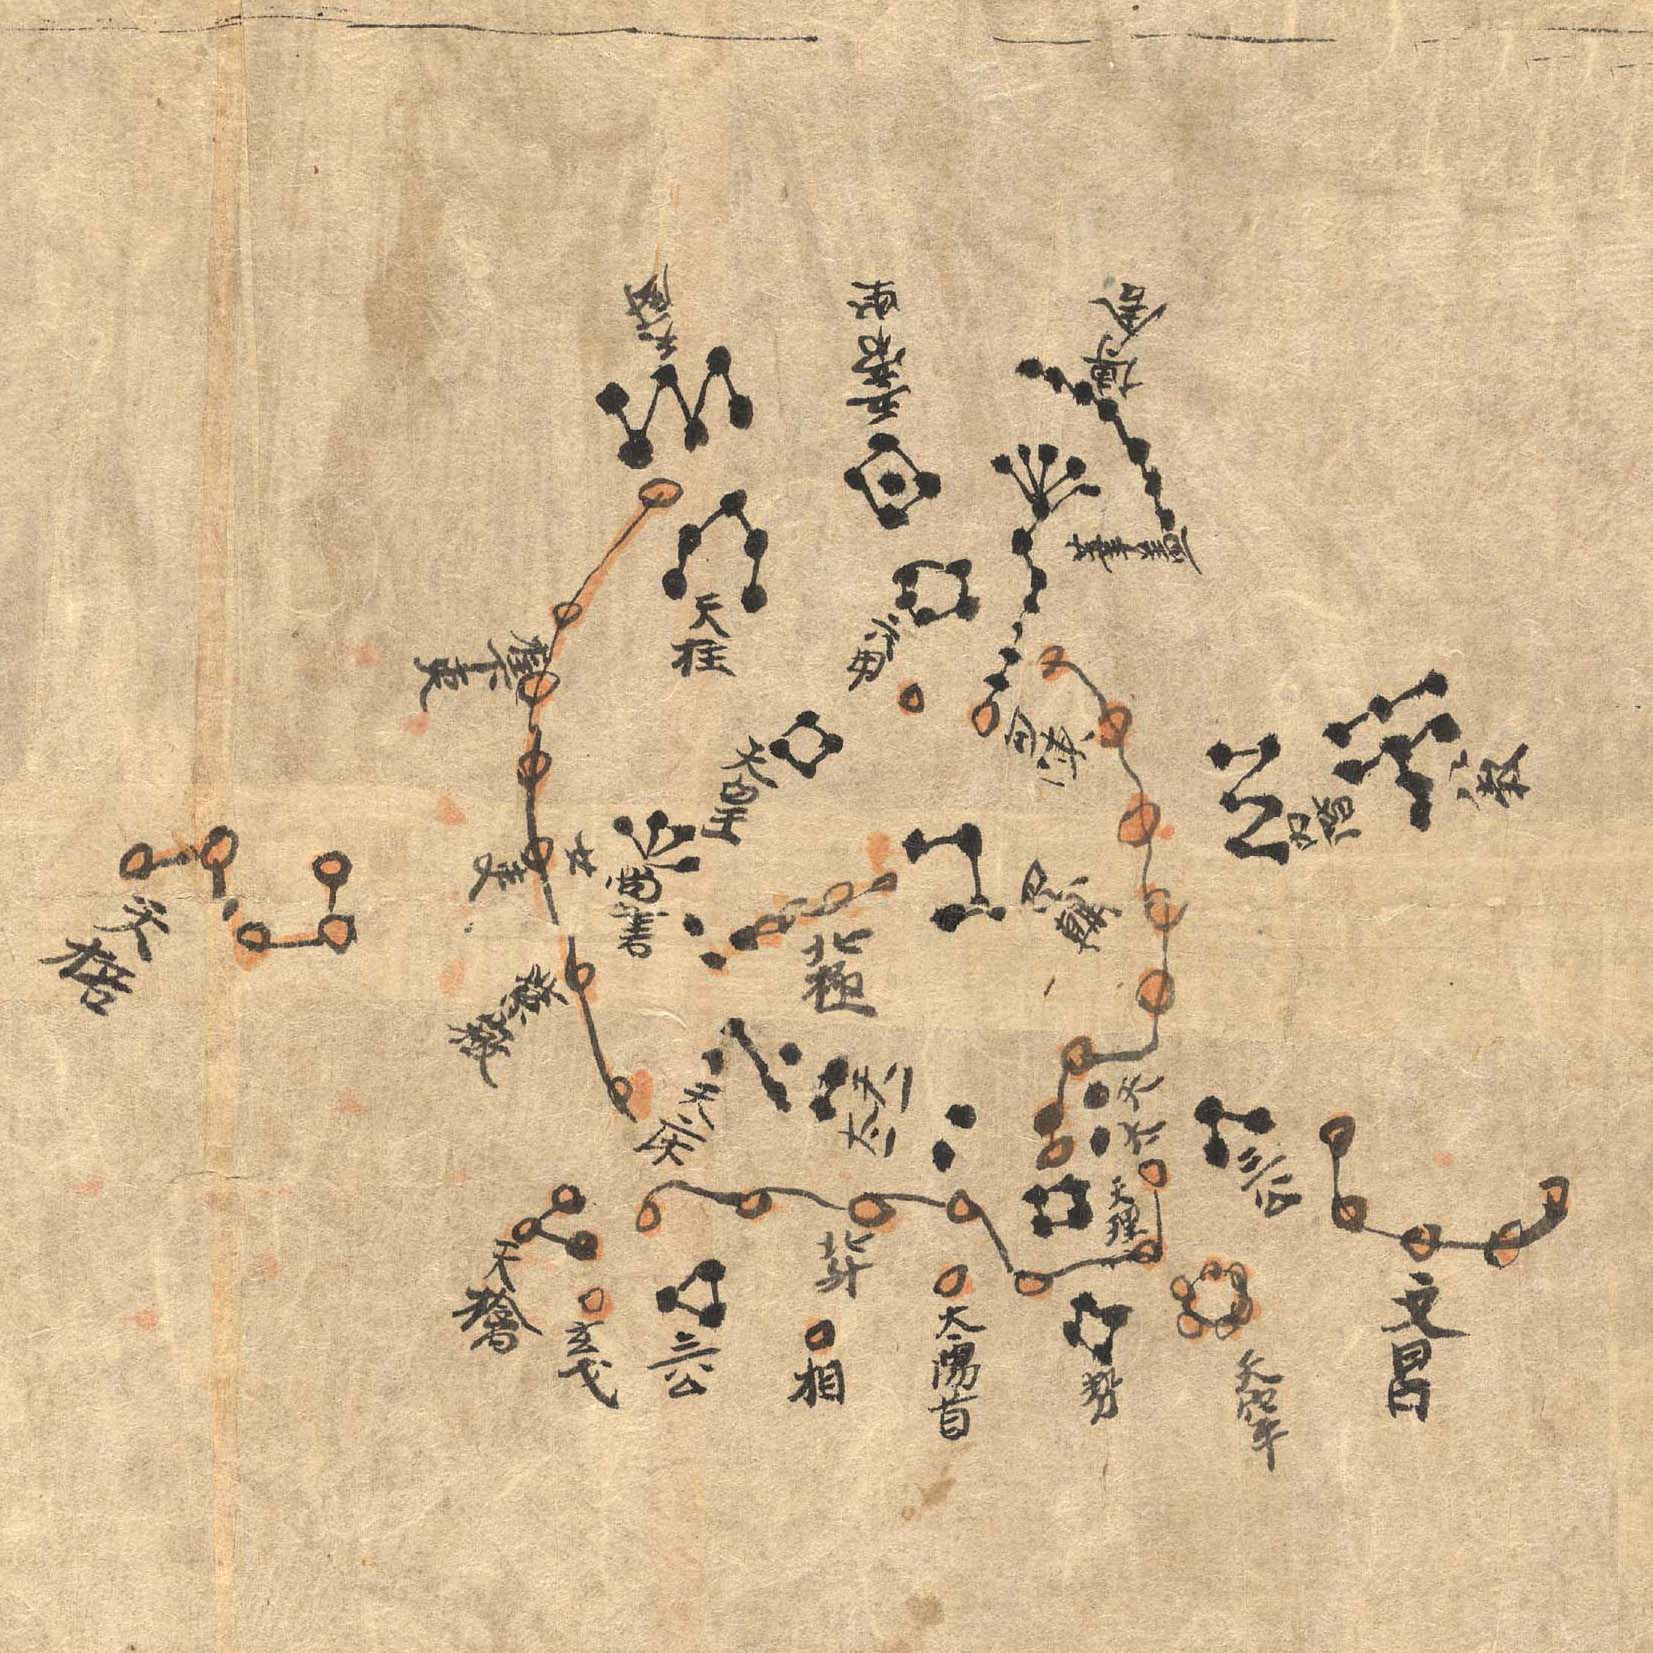 Ptolemy Star Chart